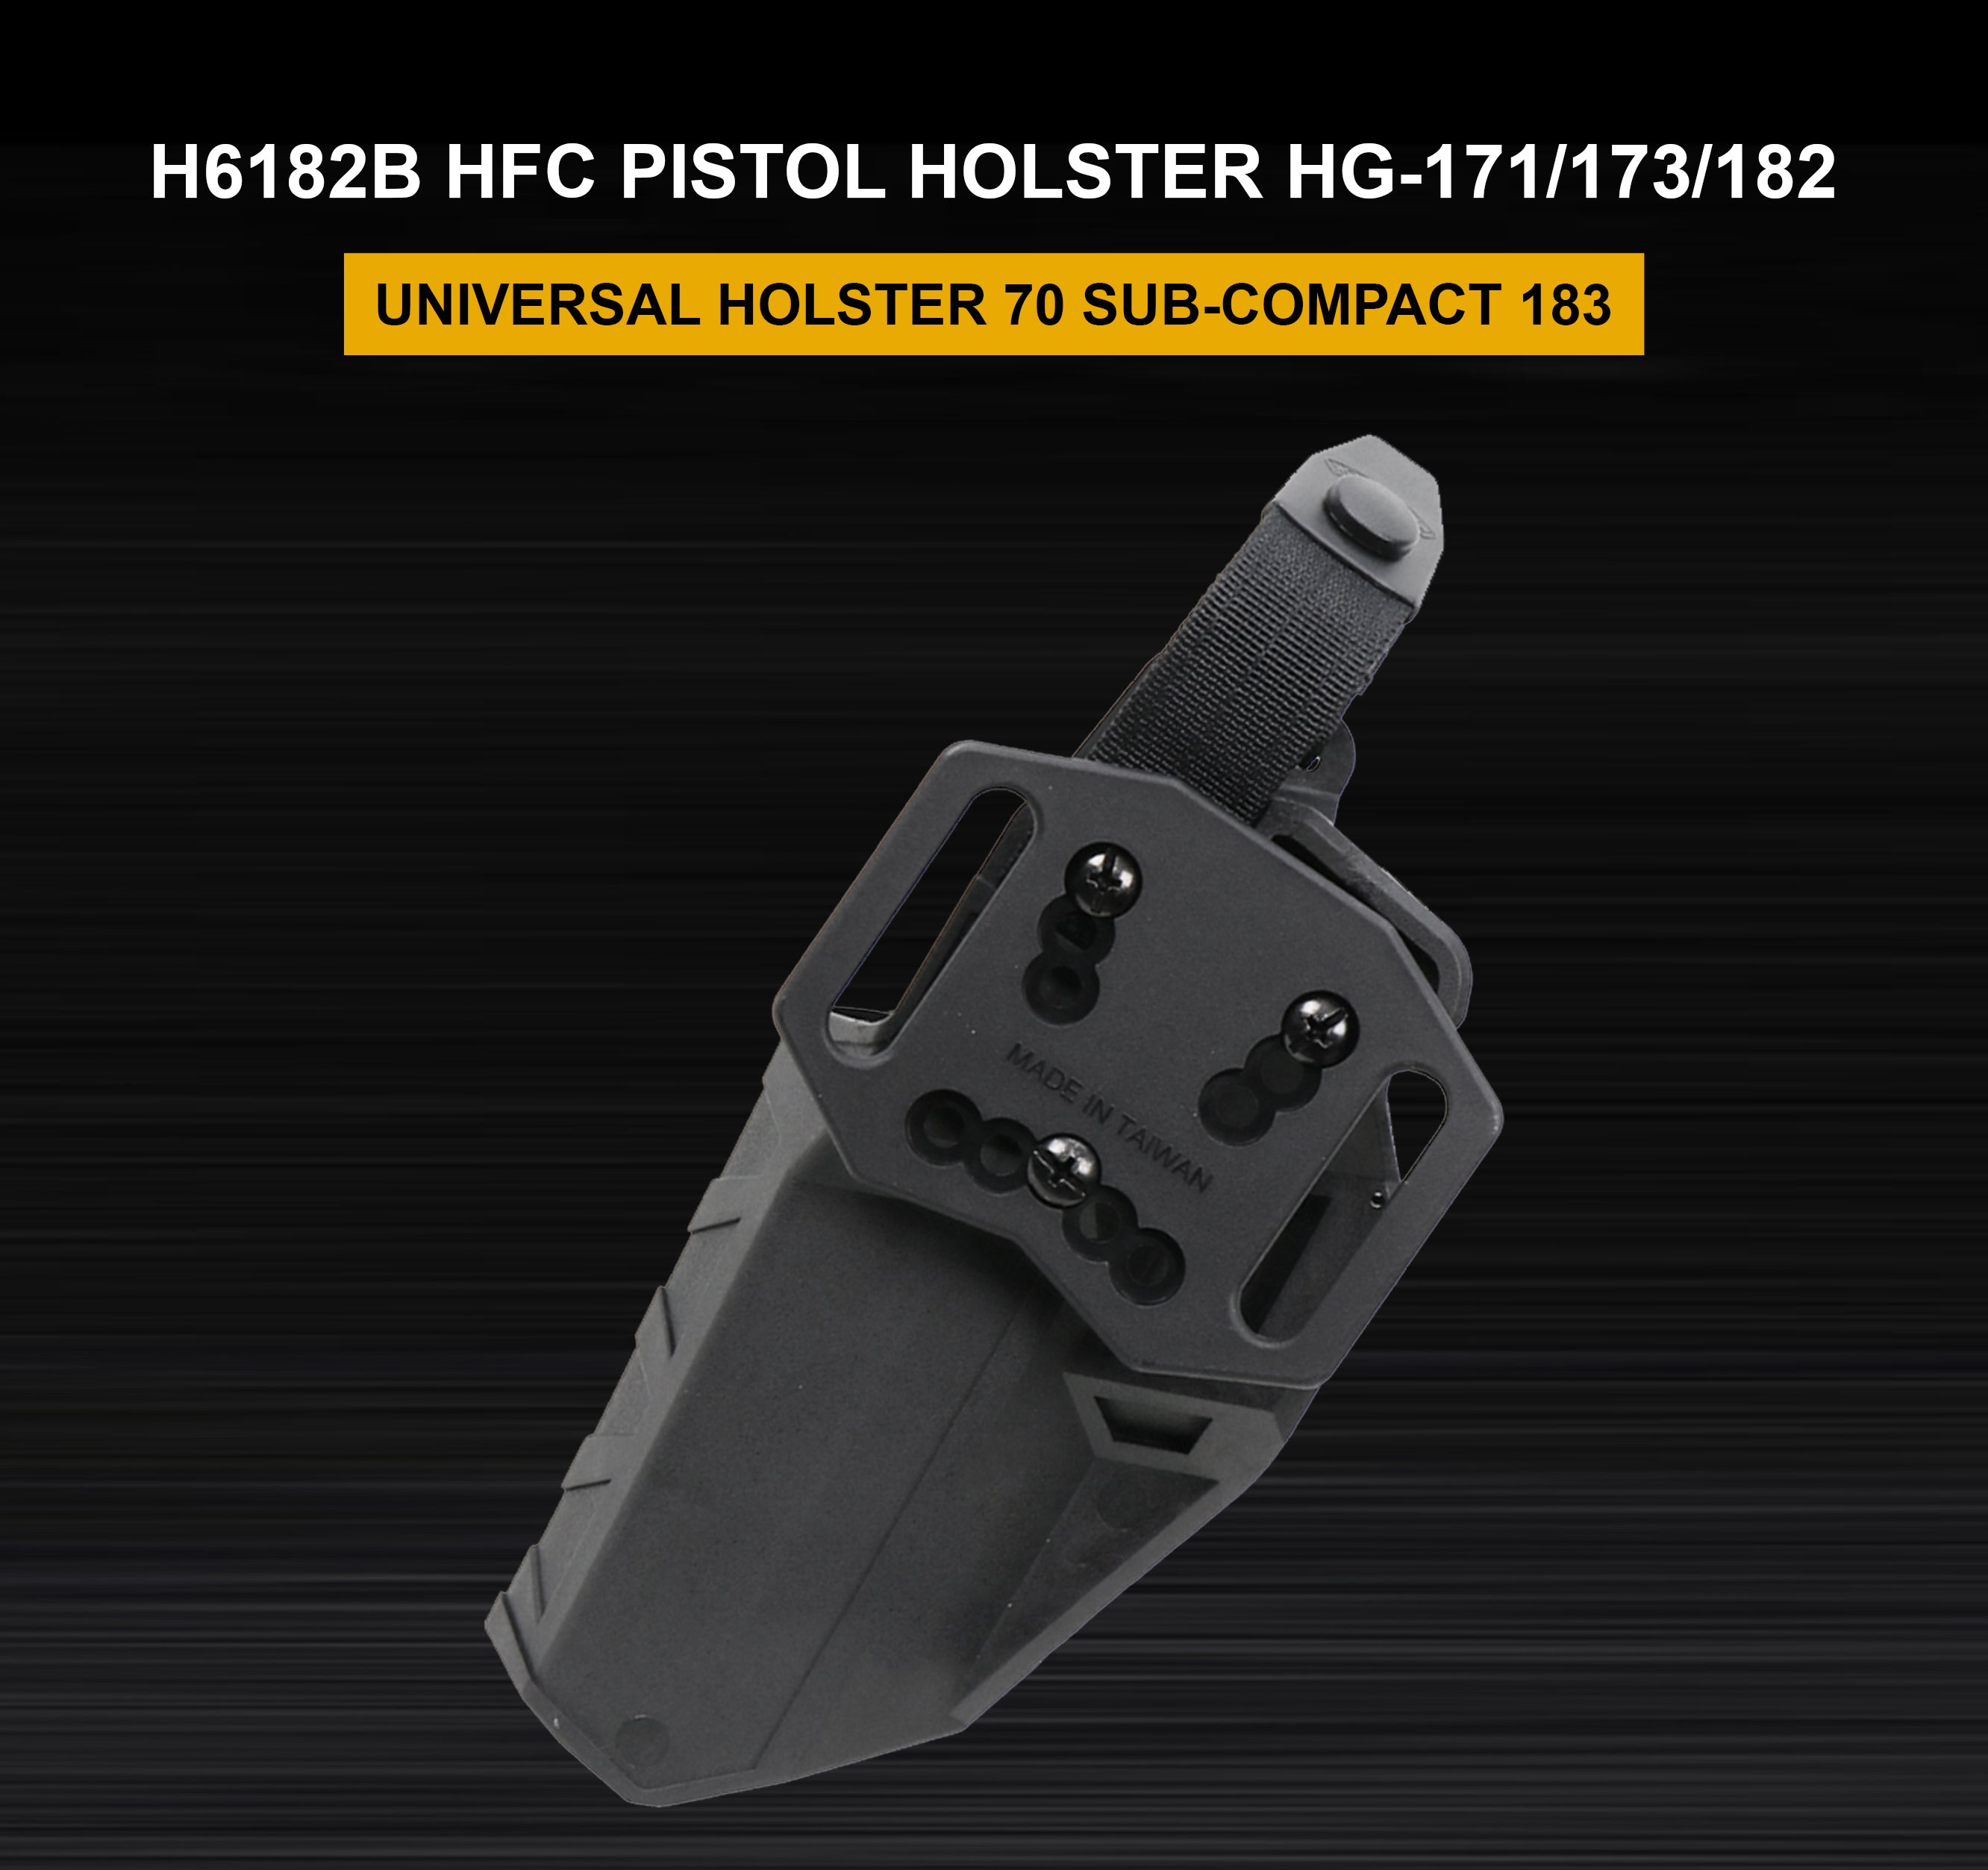 HFC H6182B HFC PISTOL HOLSTER HG-171/173/182